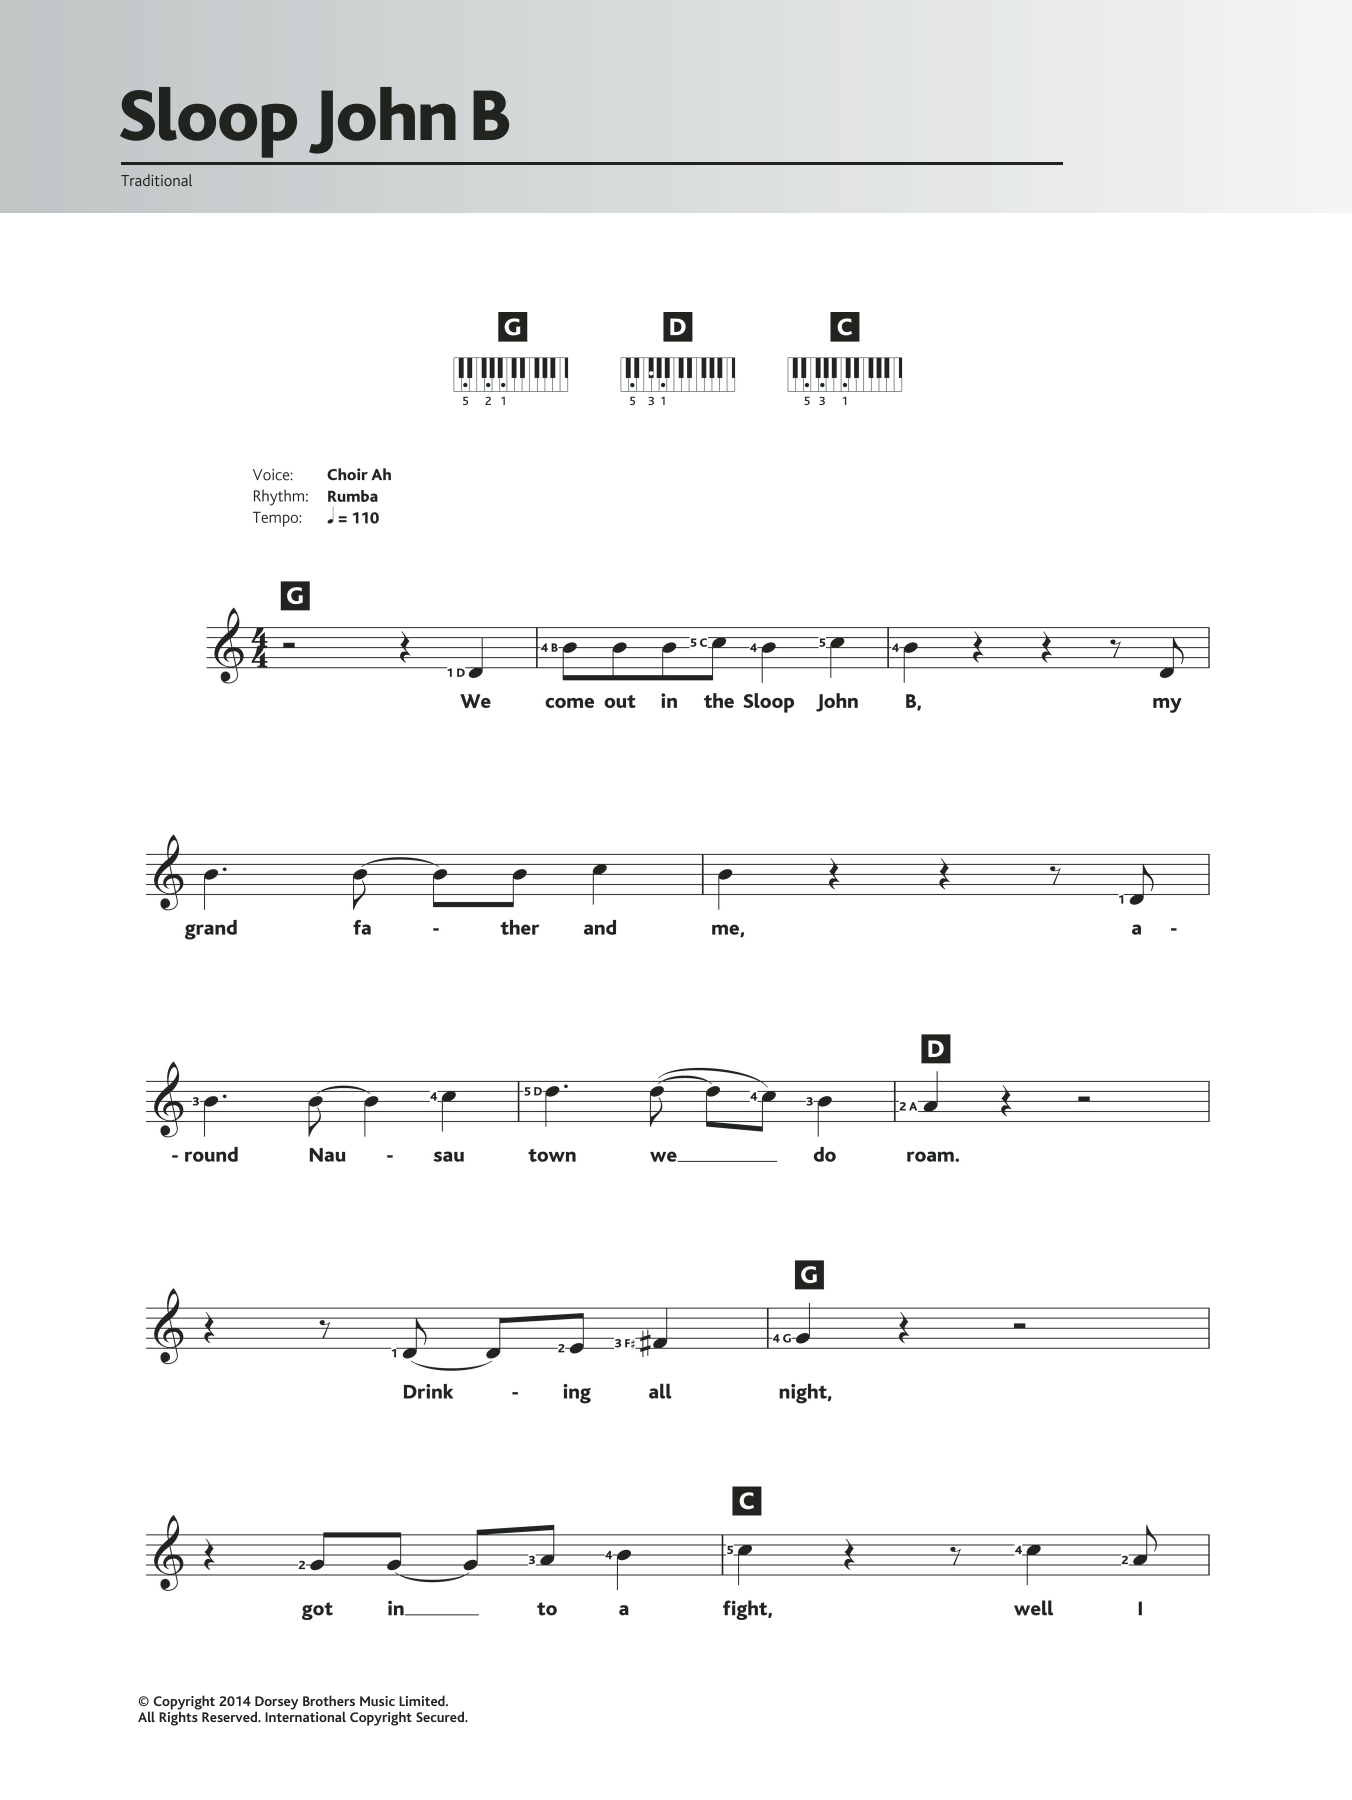 Traditional Sloop John B Sheet Music Notes & Chords for Ukulele with strumming patterns - Download or Print PDF